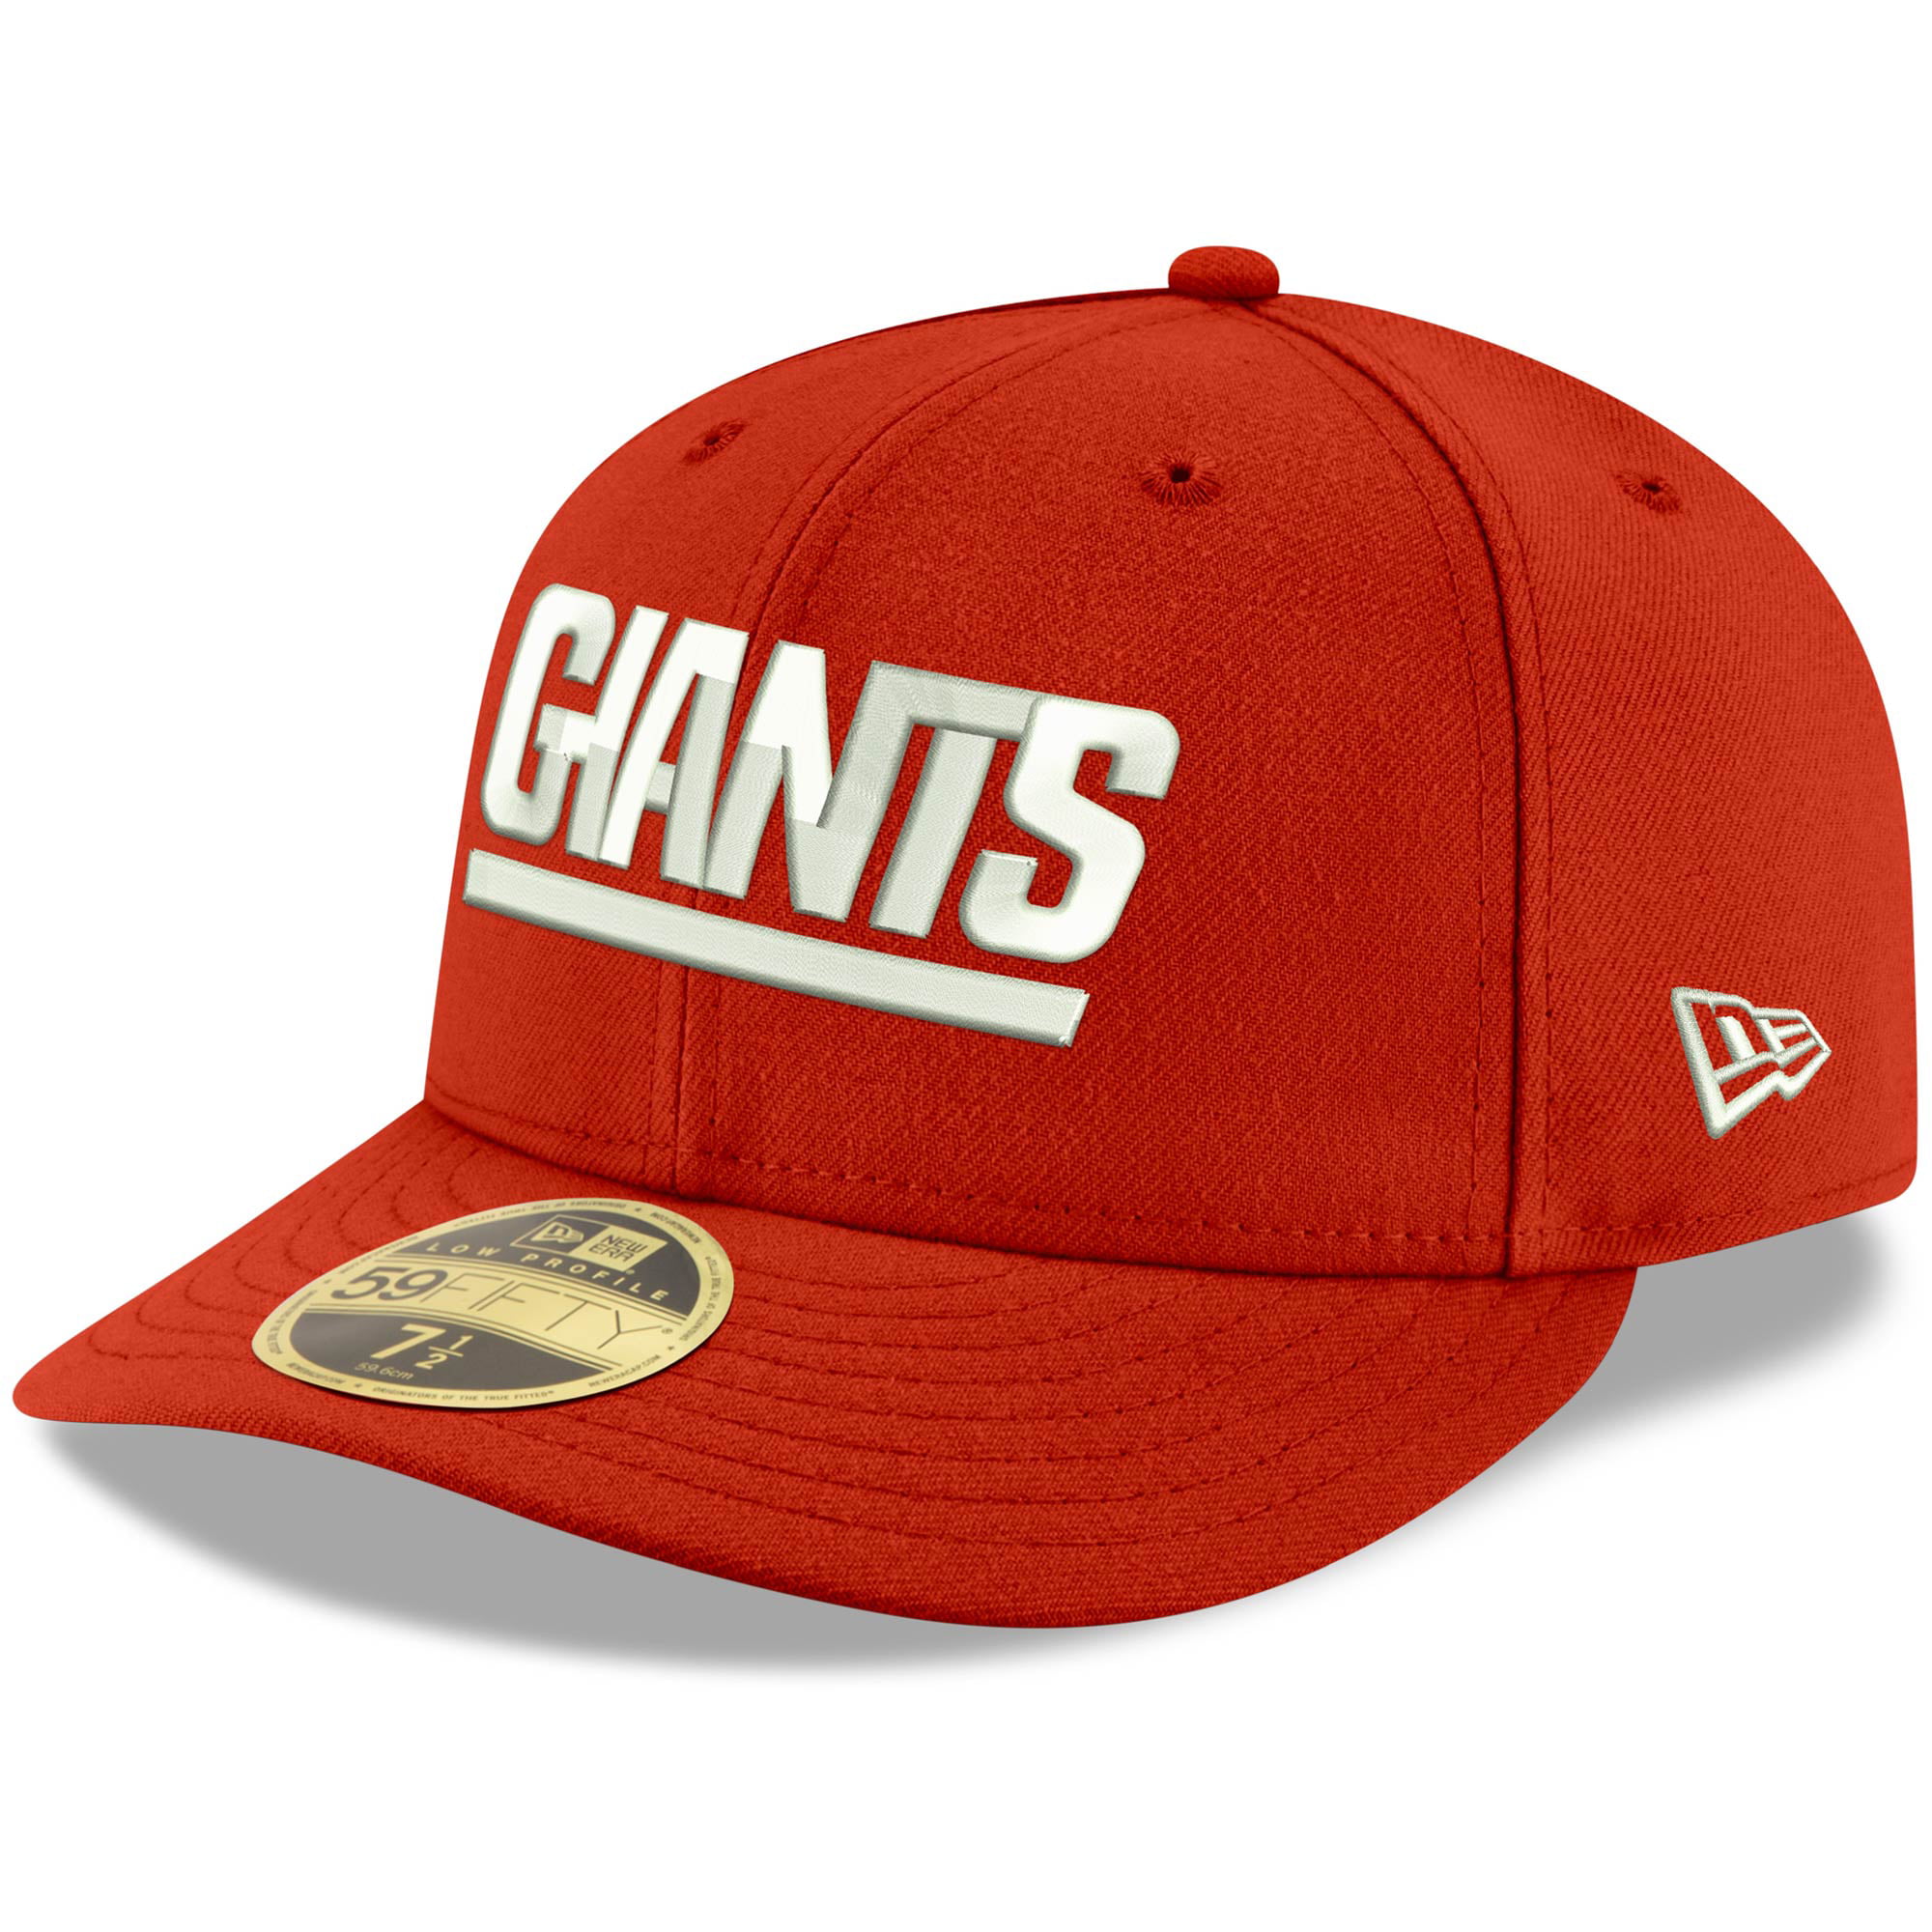 New Era Men's Black New York Giants Omaha 59FIFTY Hat 